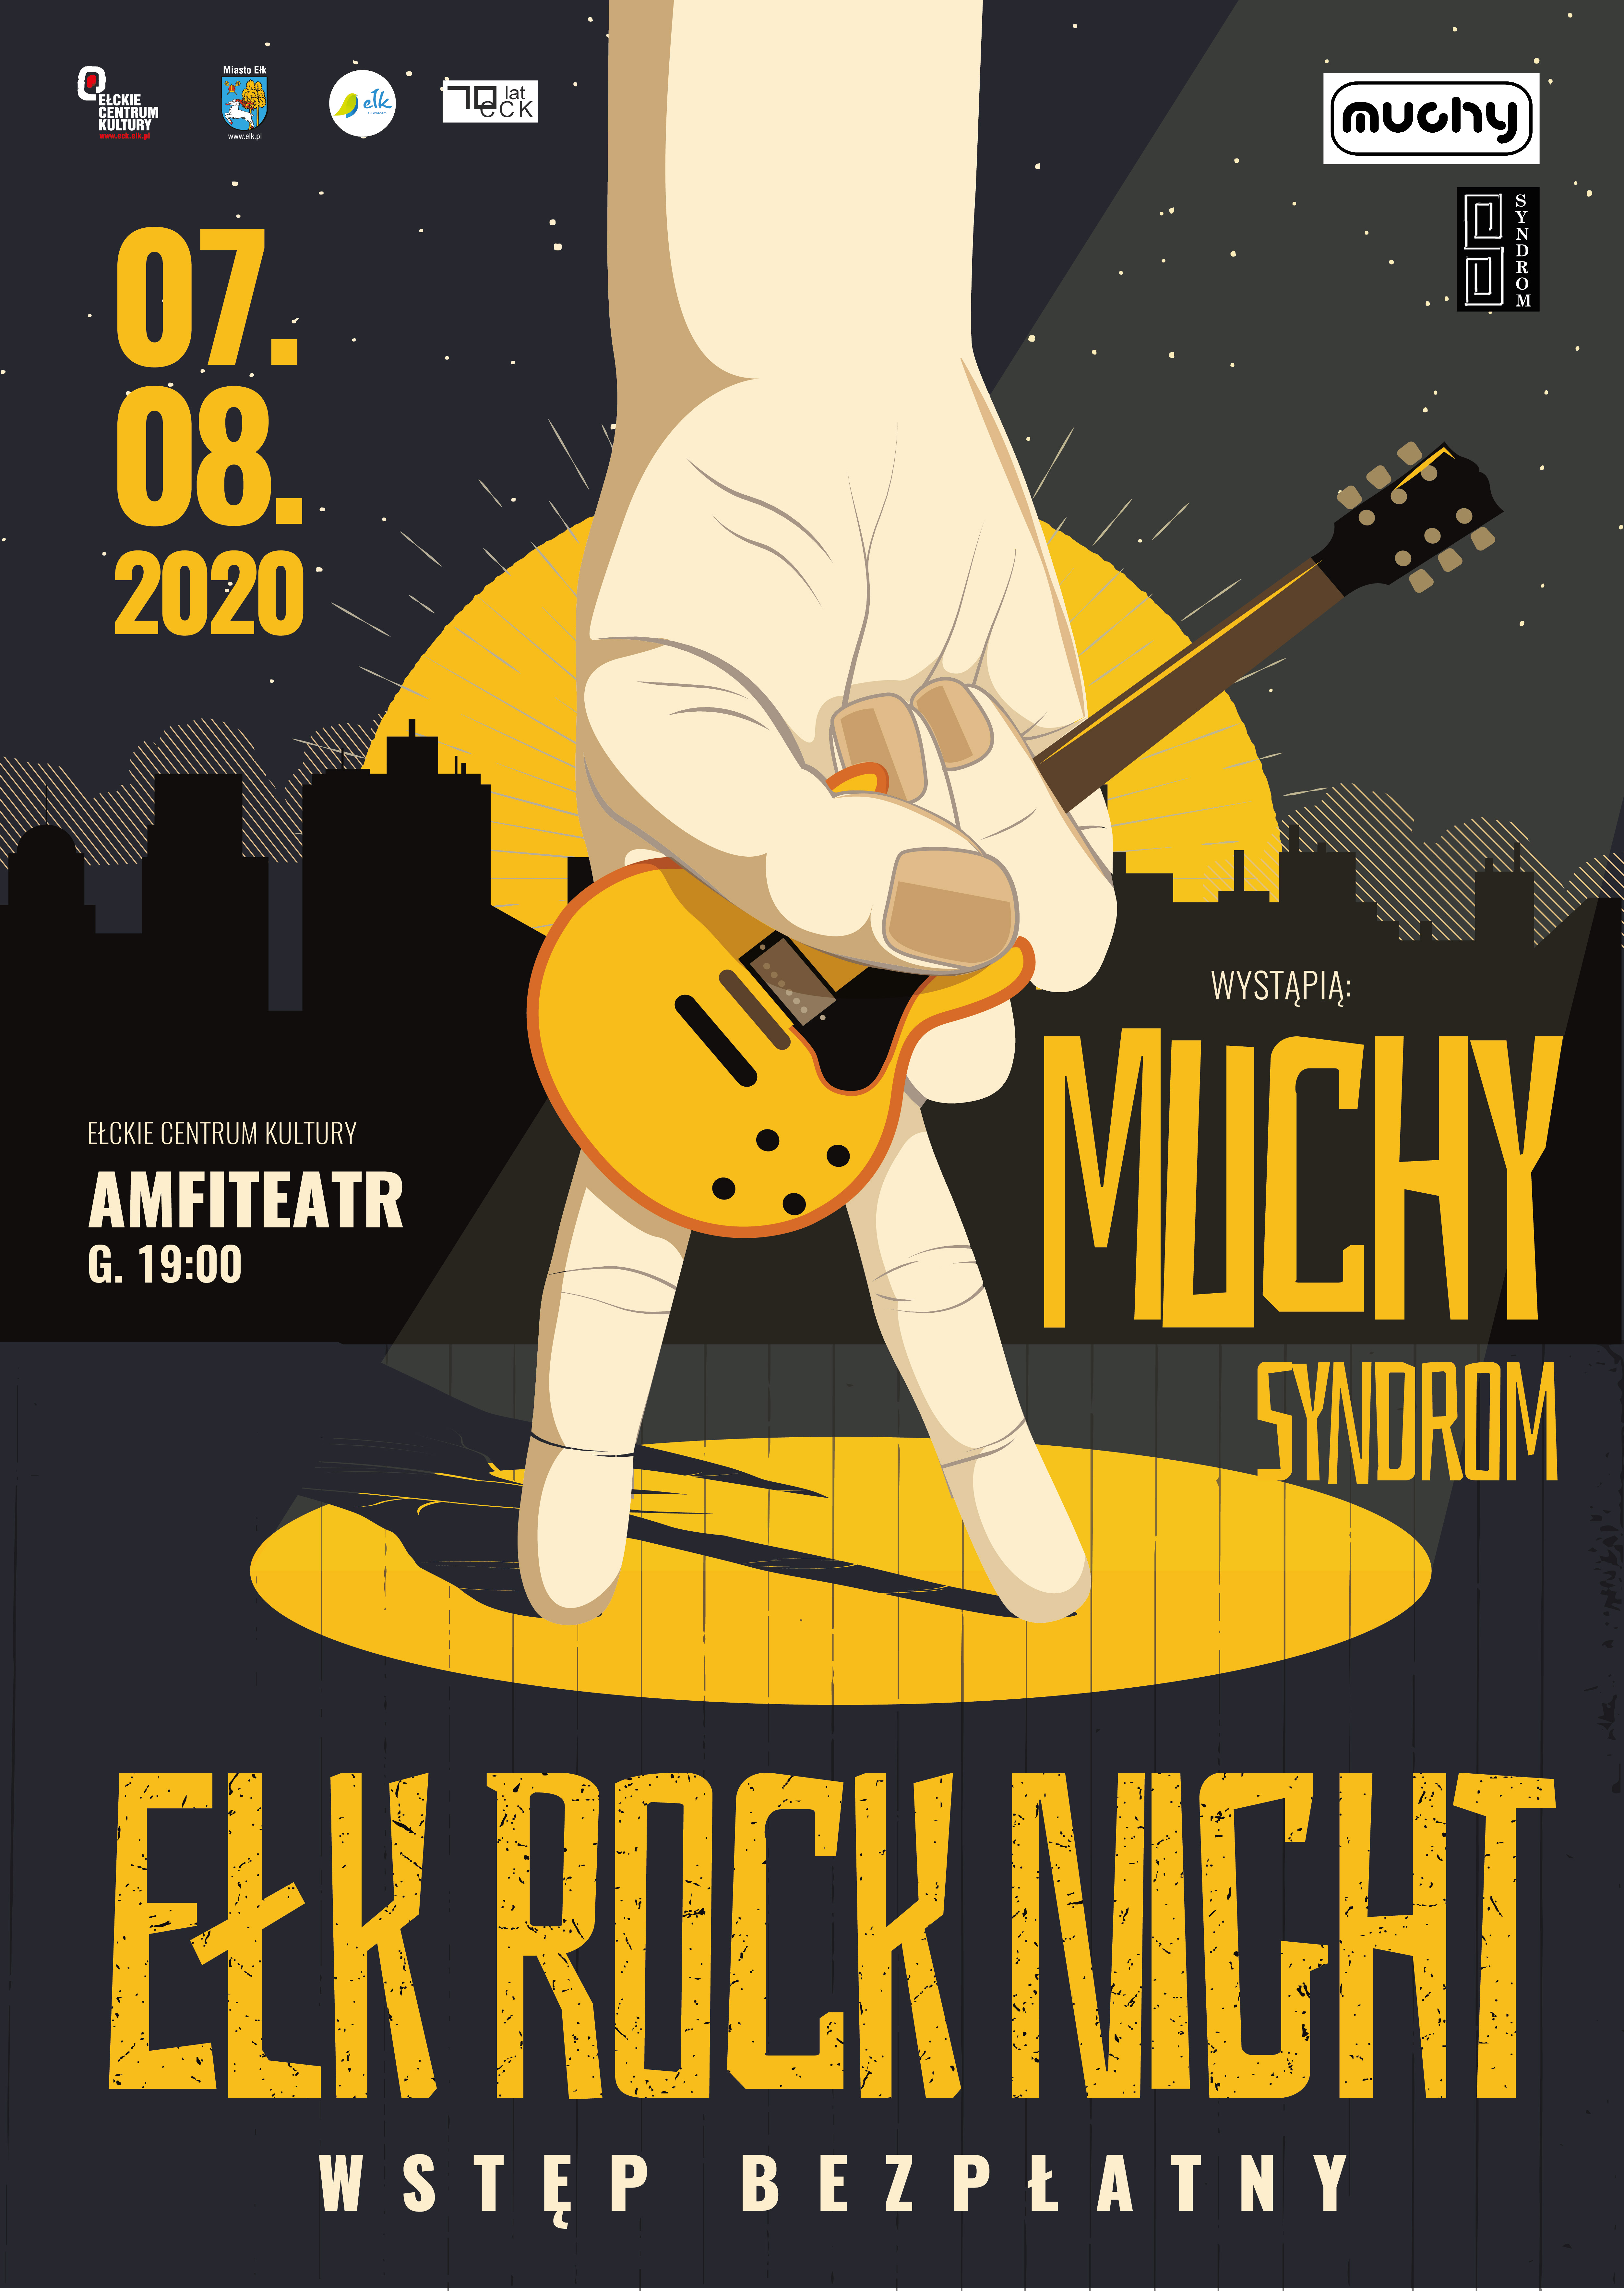 ECK_Ełk Rock Night_plakat A2.jpg